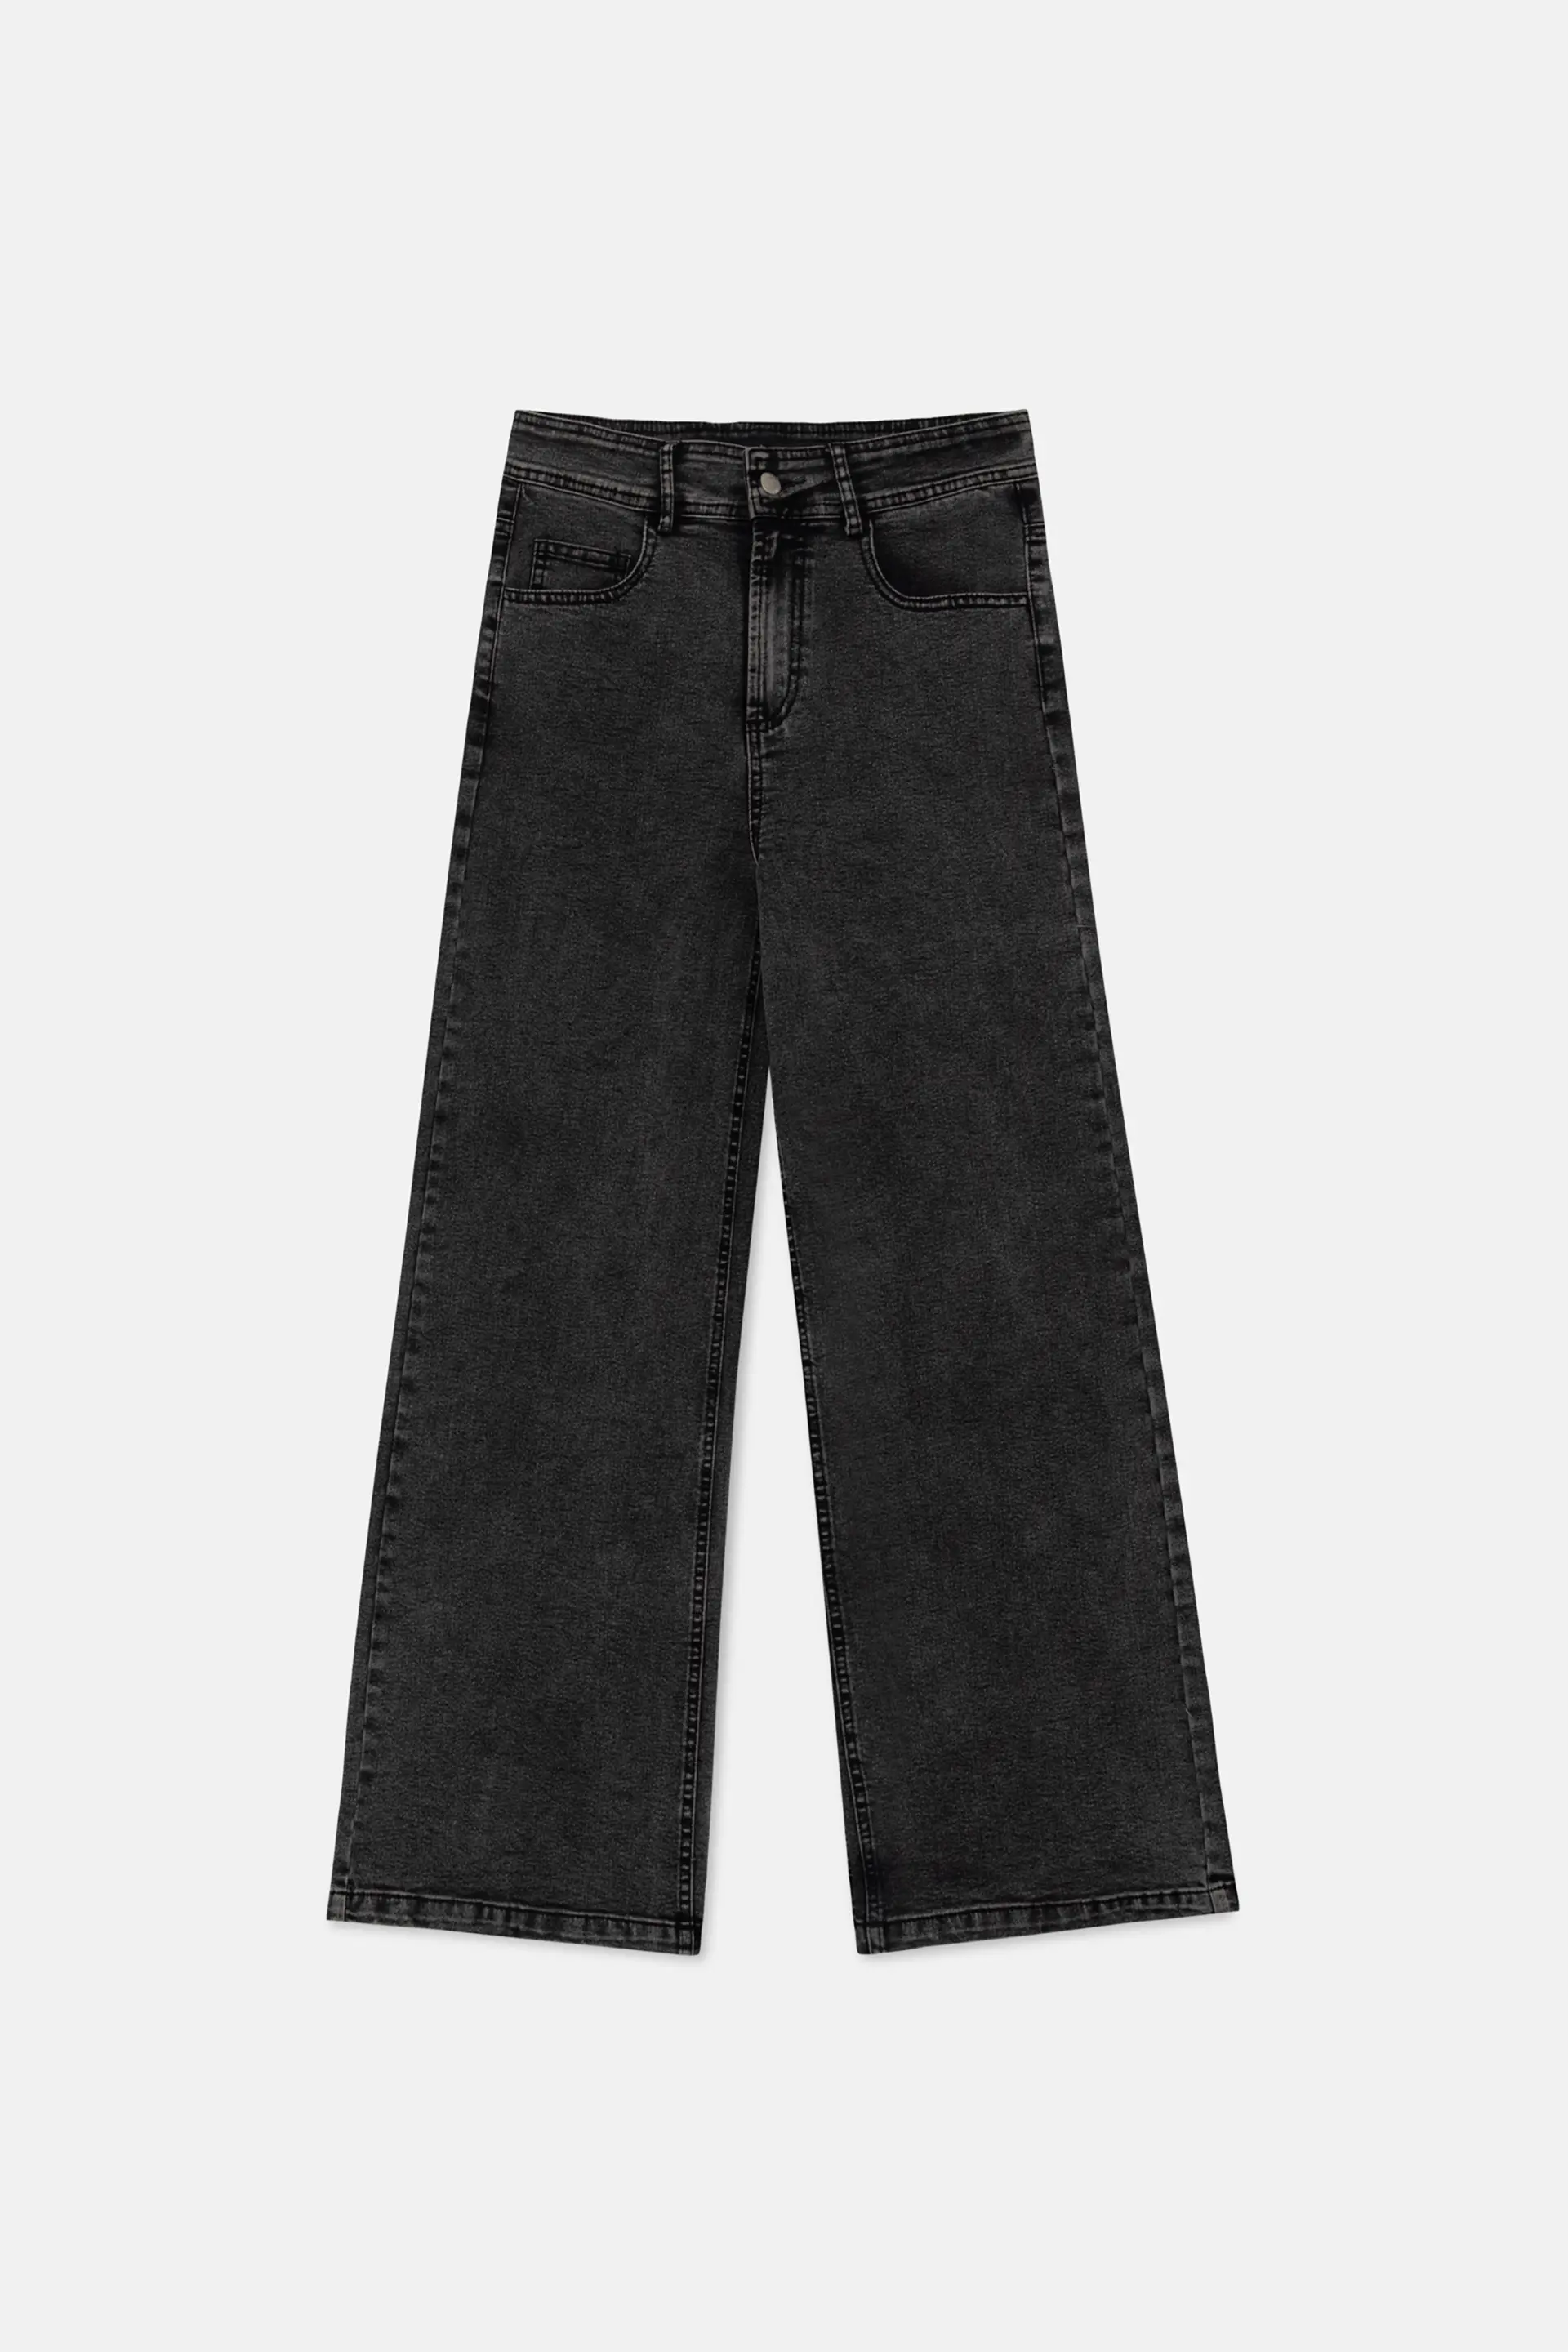 Jeans Rectos Negros De Cintura Alta, Pantalones De Mezclilla De Tiro Alto  Sin Estiramiento, Pantalones De Mezclilla Y Ropa De Mujer